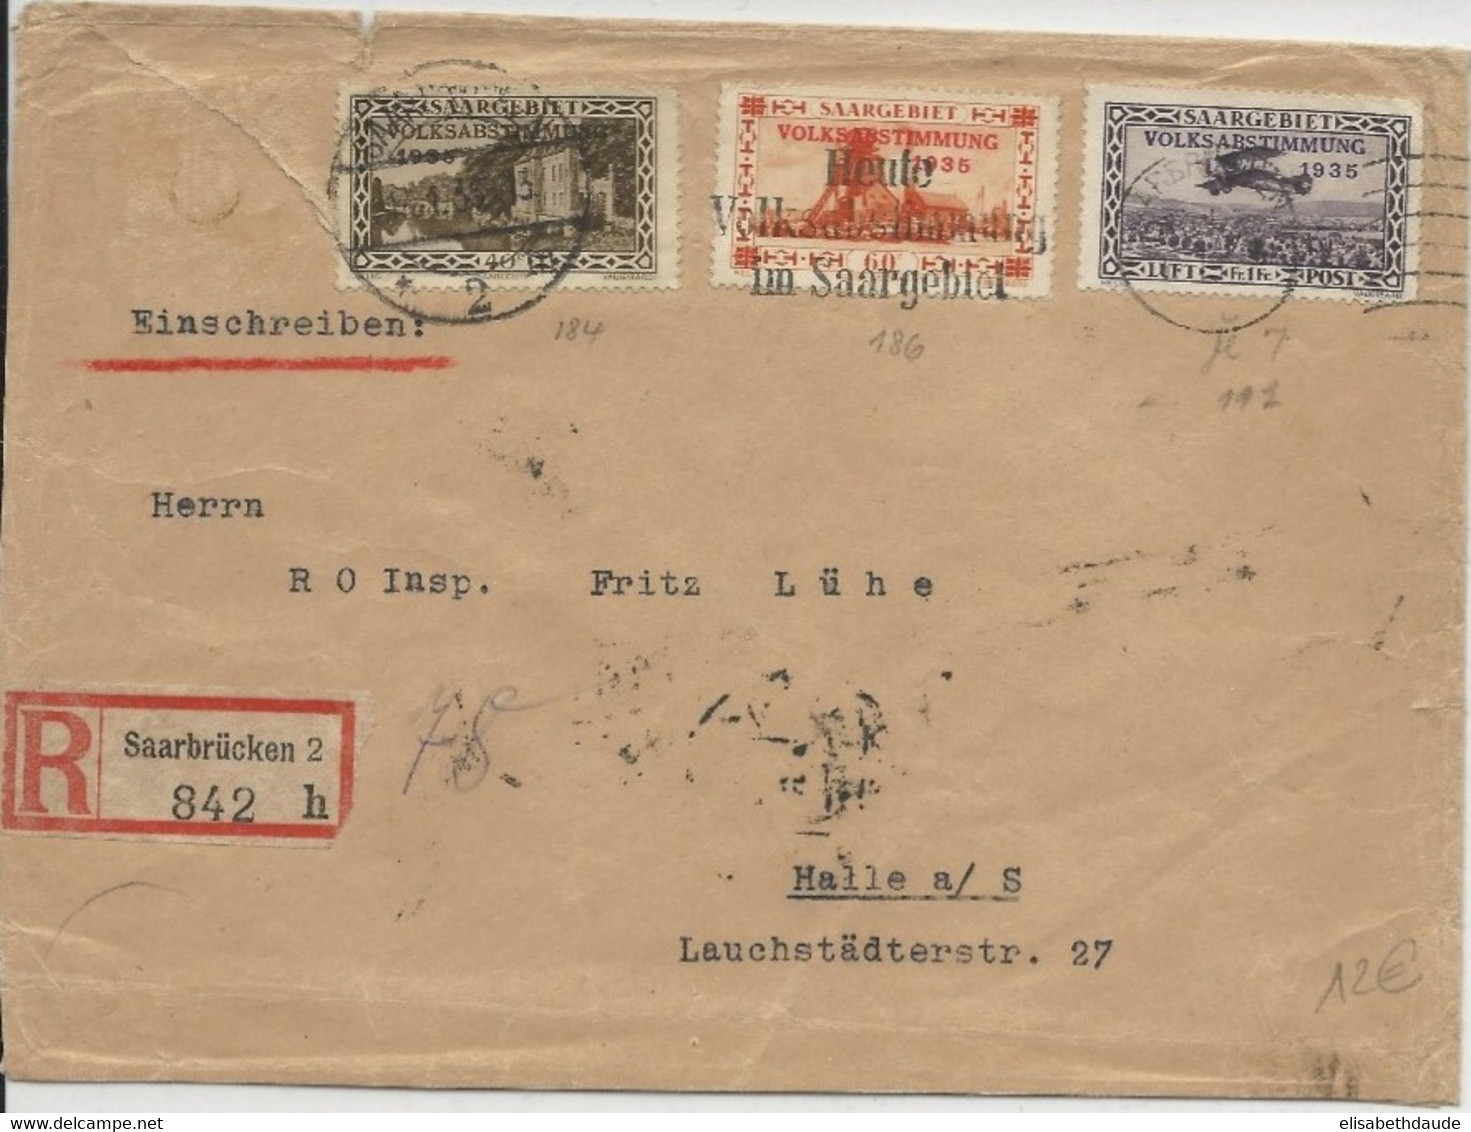 SAAR - 13 JANVIER 1935 (DATE Du REFERENDUM - VOLKSABSTIMMUNG) - ENVELOPPE RECOMMANDEE De SAARBRÜCKEN Pour HALLE - Covers & Documents